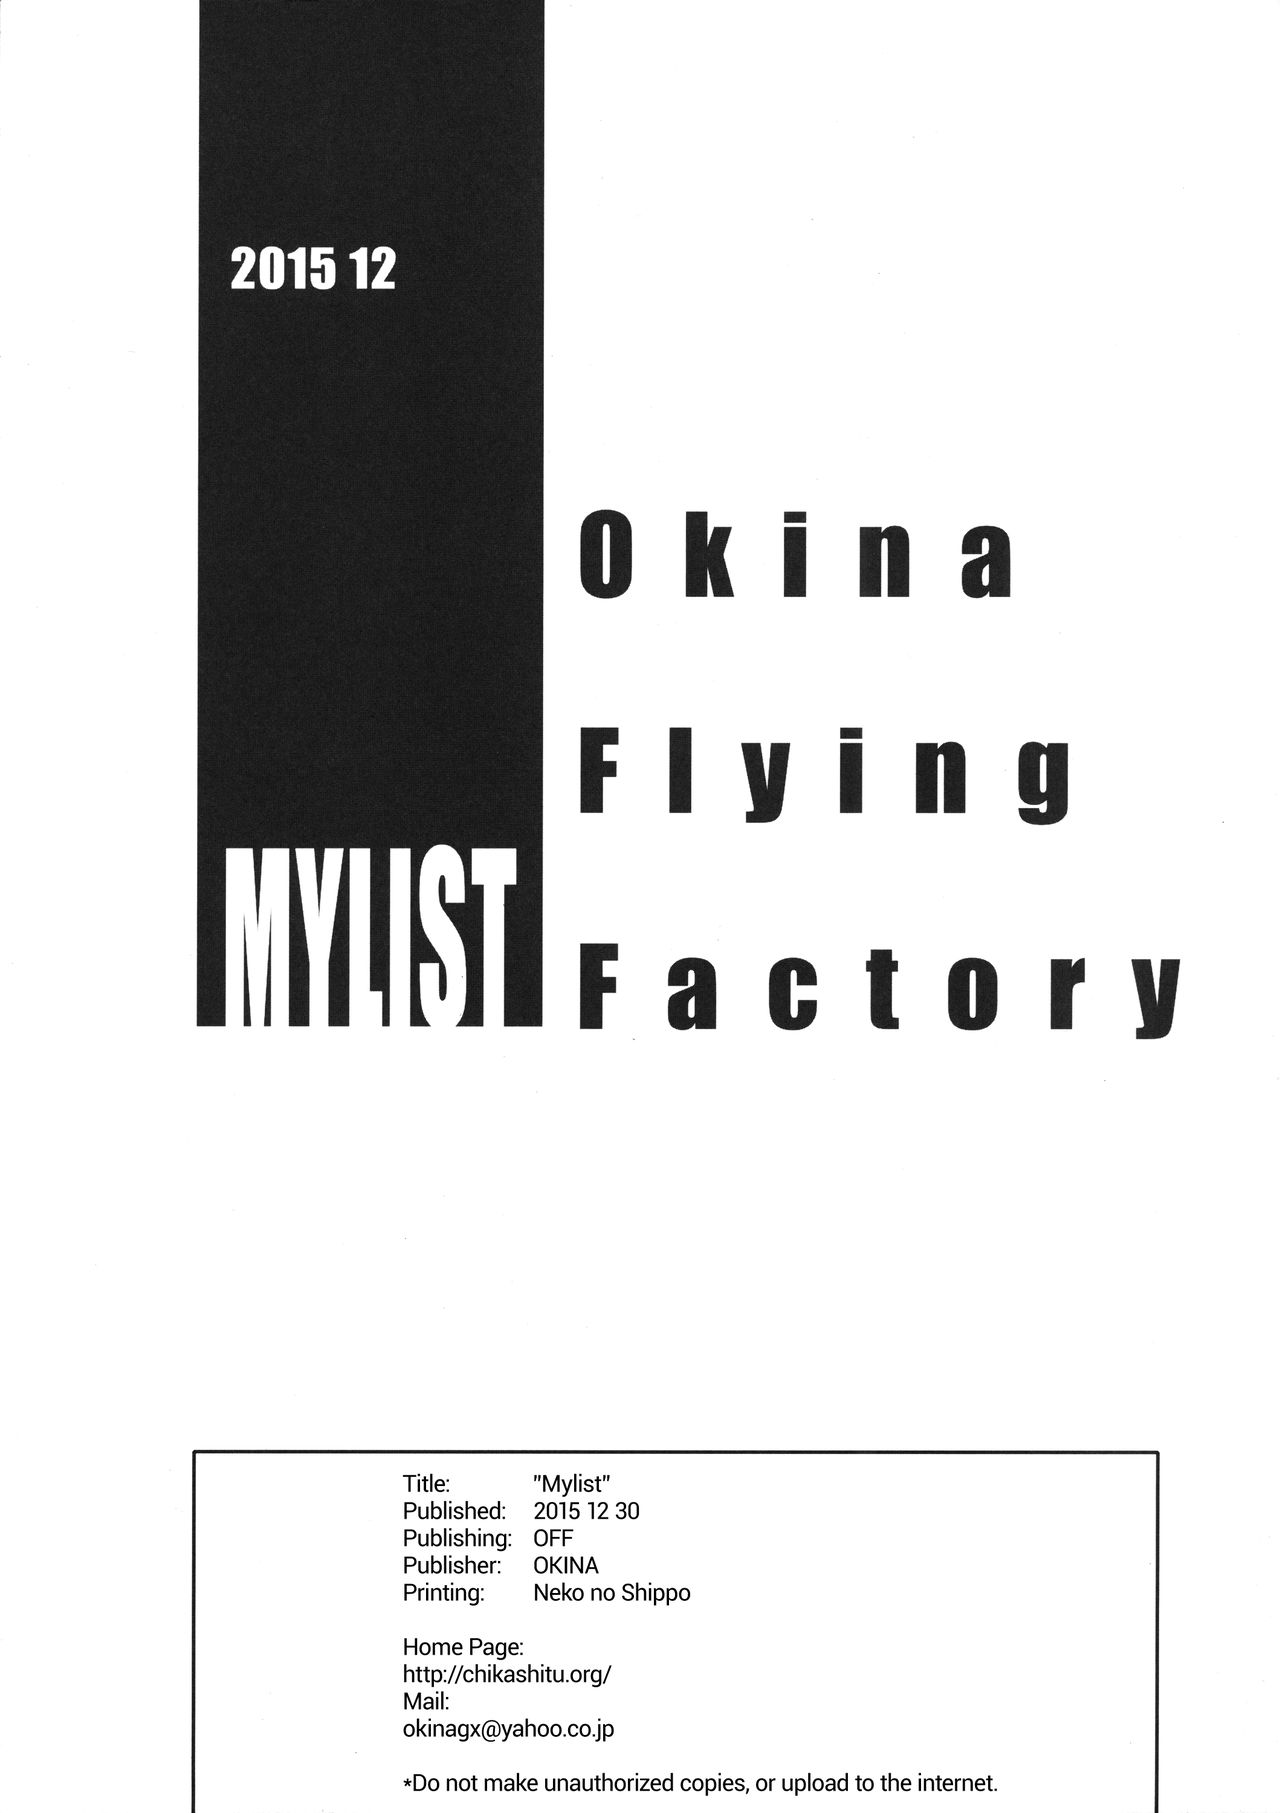 Okina flying factory